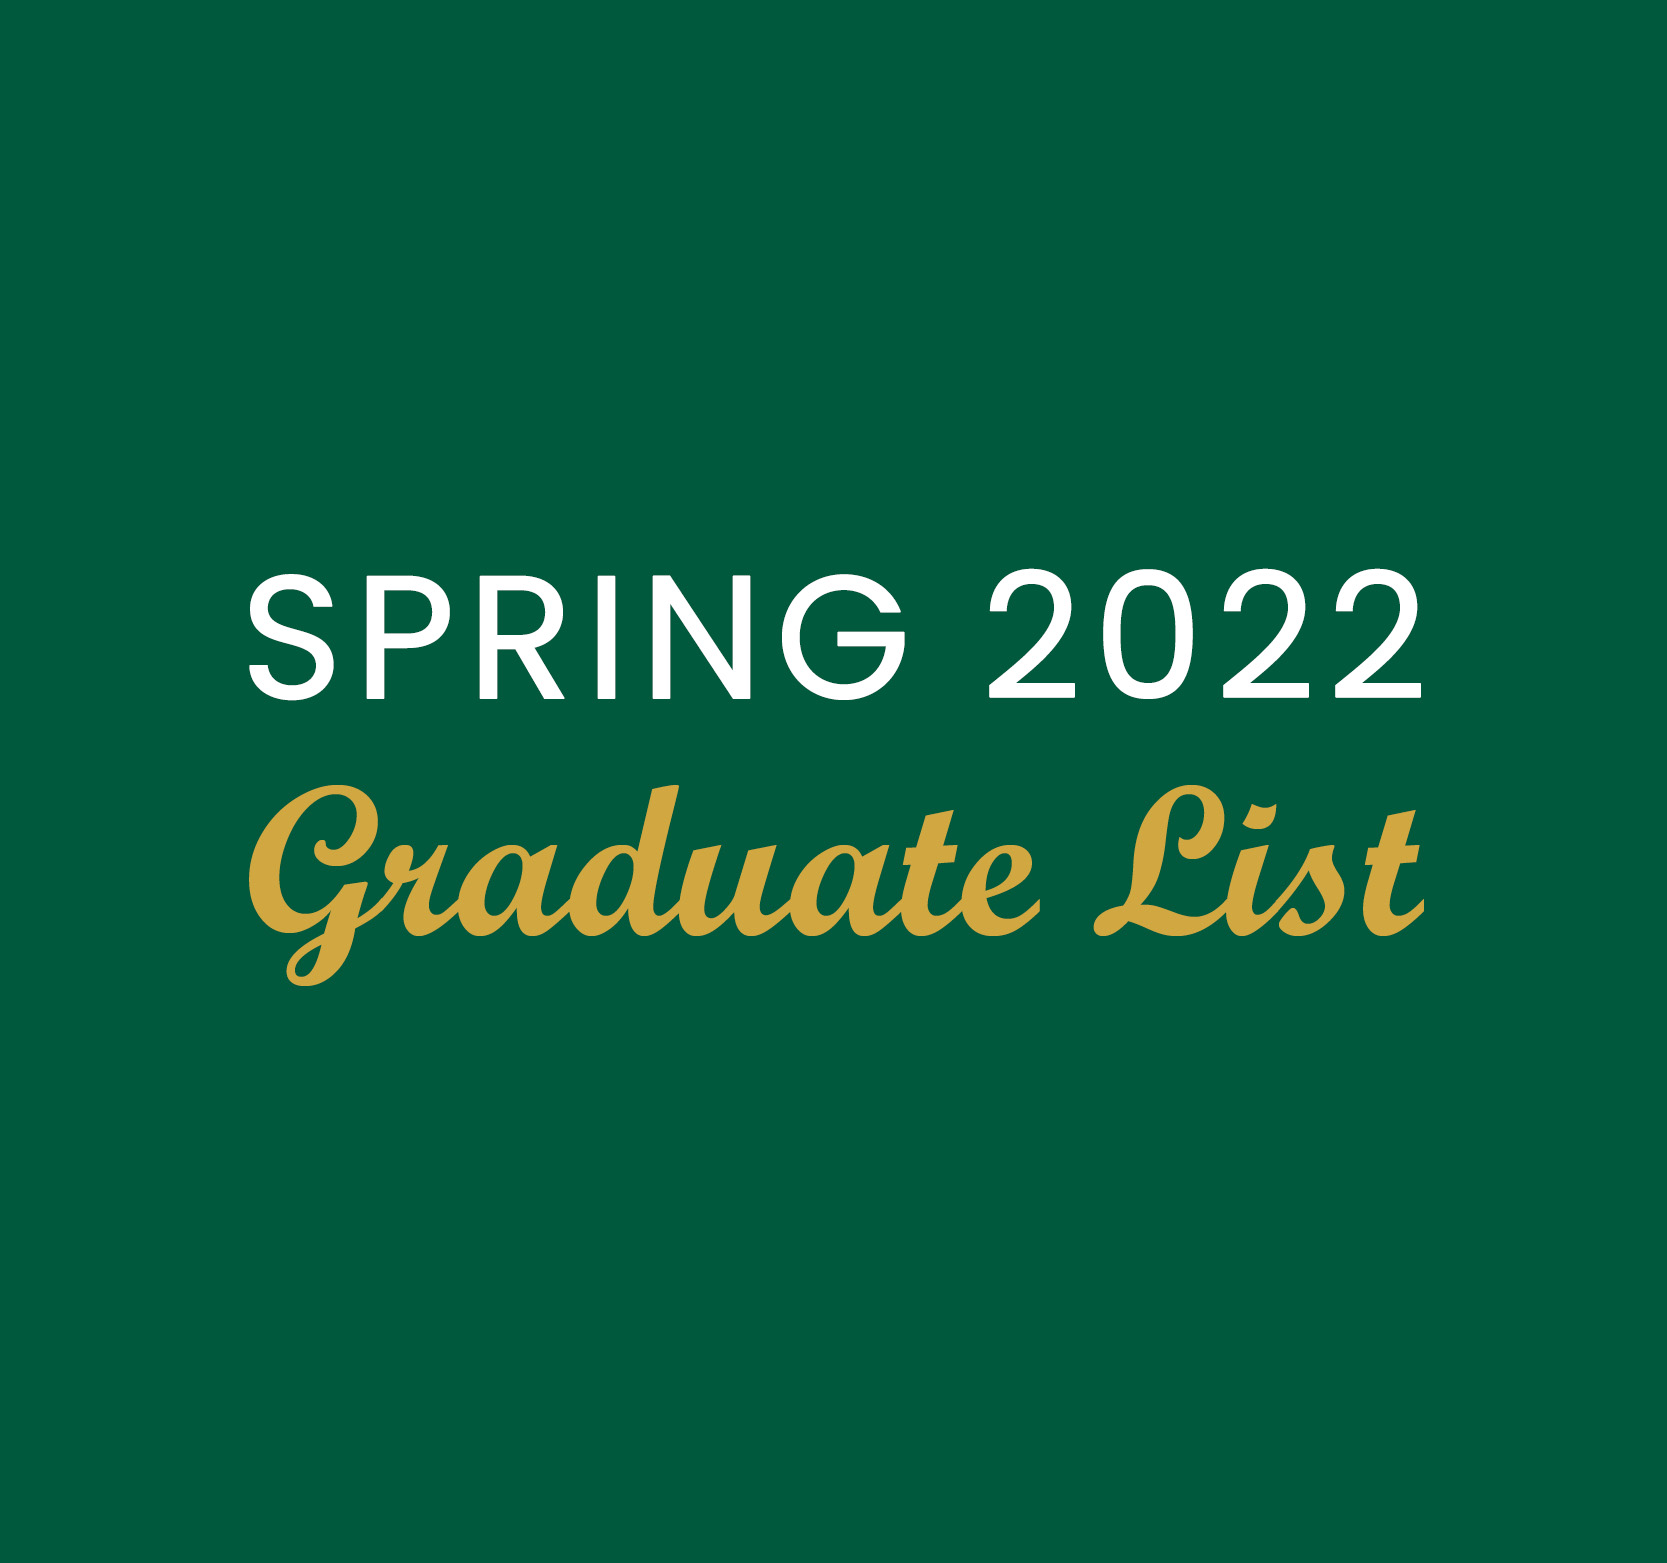 Image for Spring Convocation 2022 Graduates’ List Published